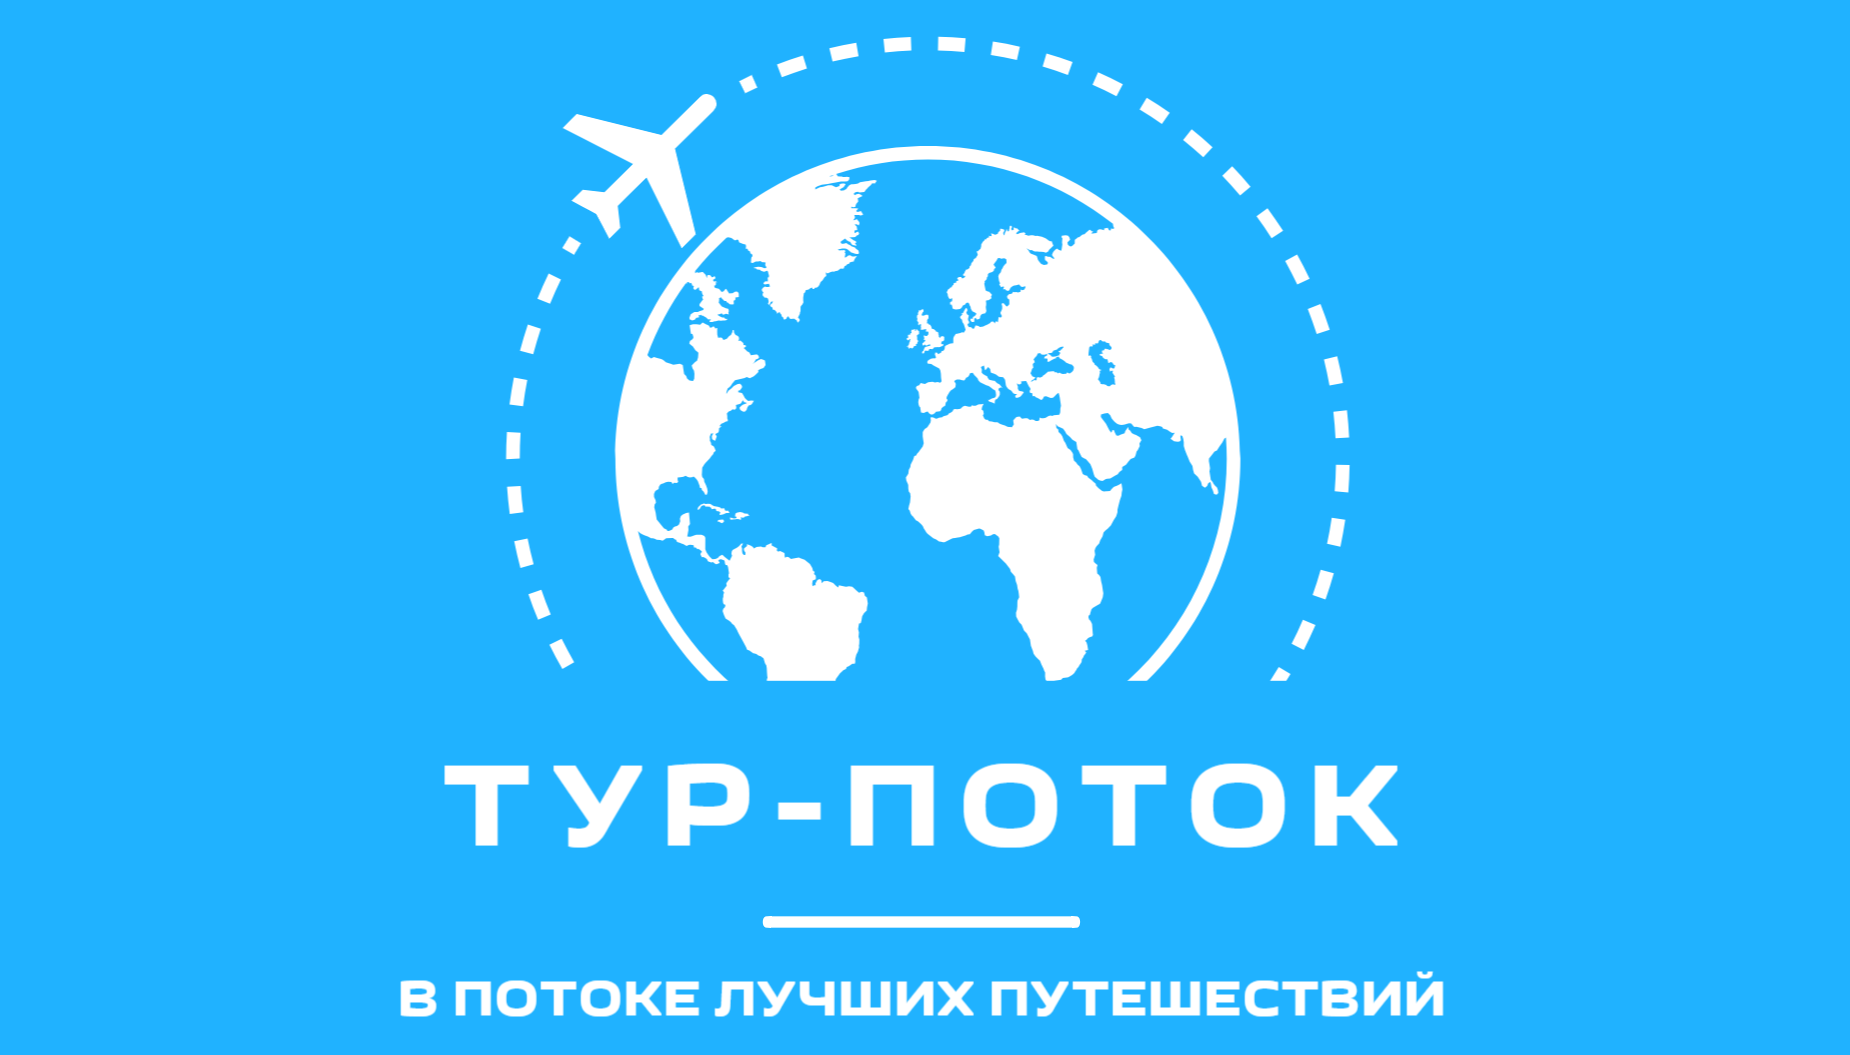  тура - Сеть туристических агентств Tur-Potok